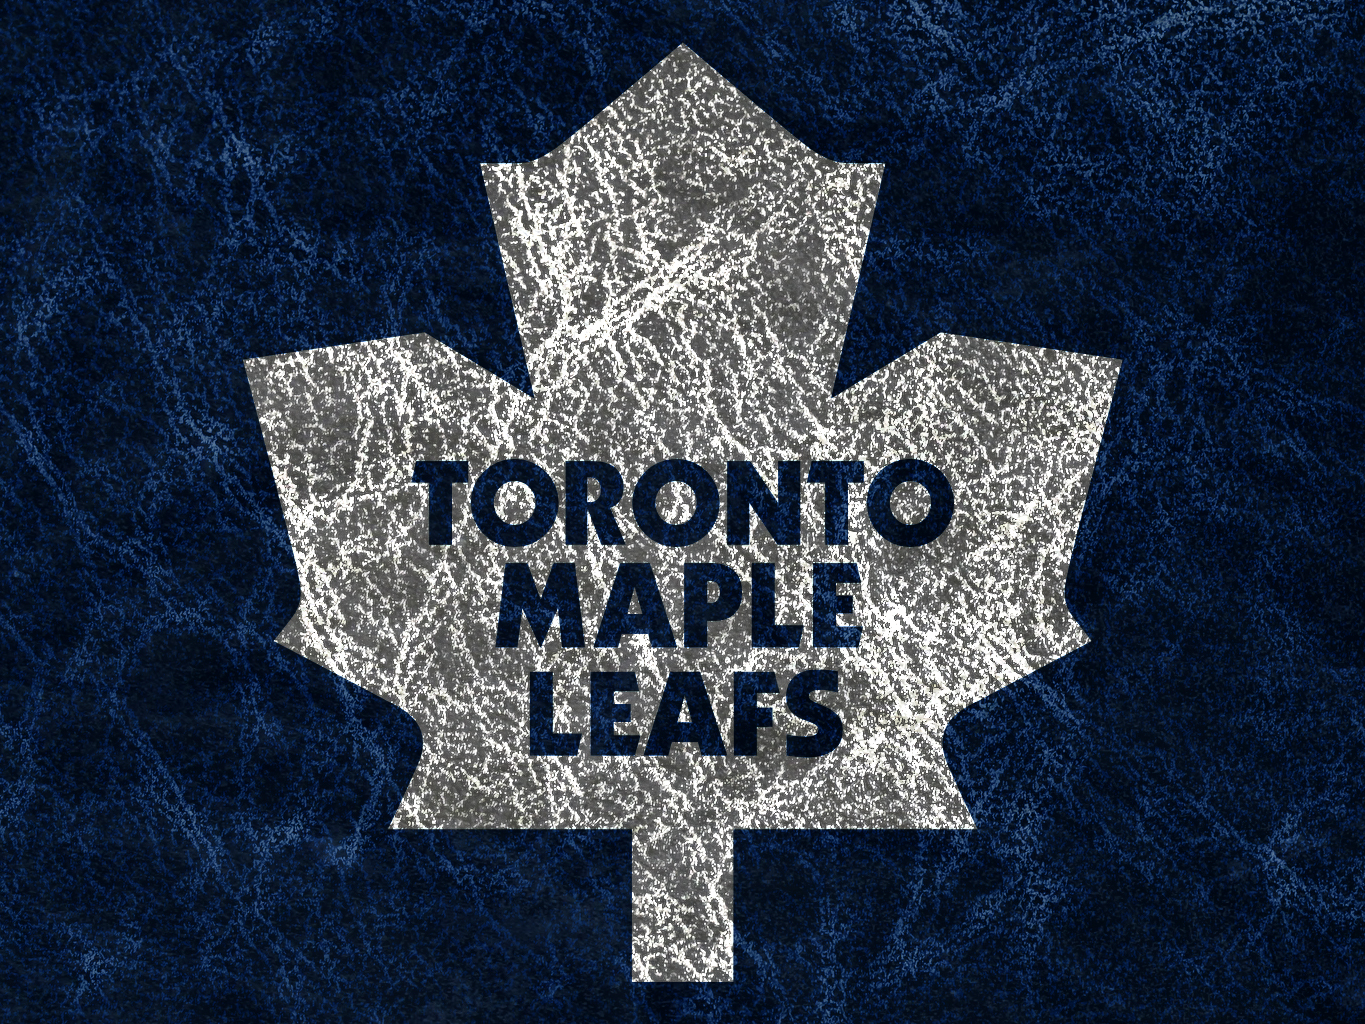 🔥 [49+] Toronto Maple Leafs Desktop Wallpaper | WallpaperSafari